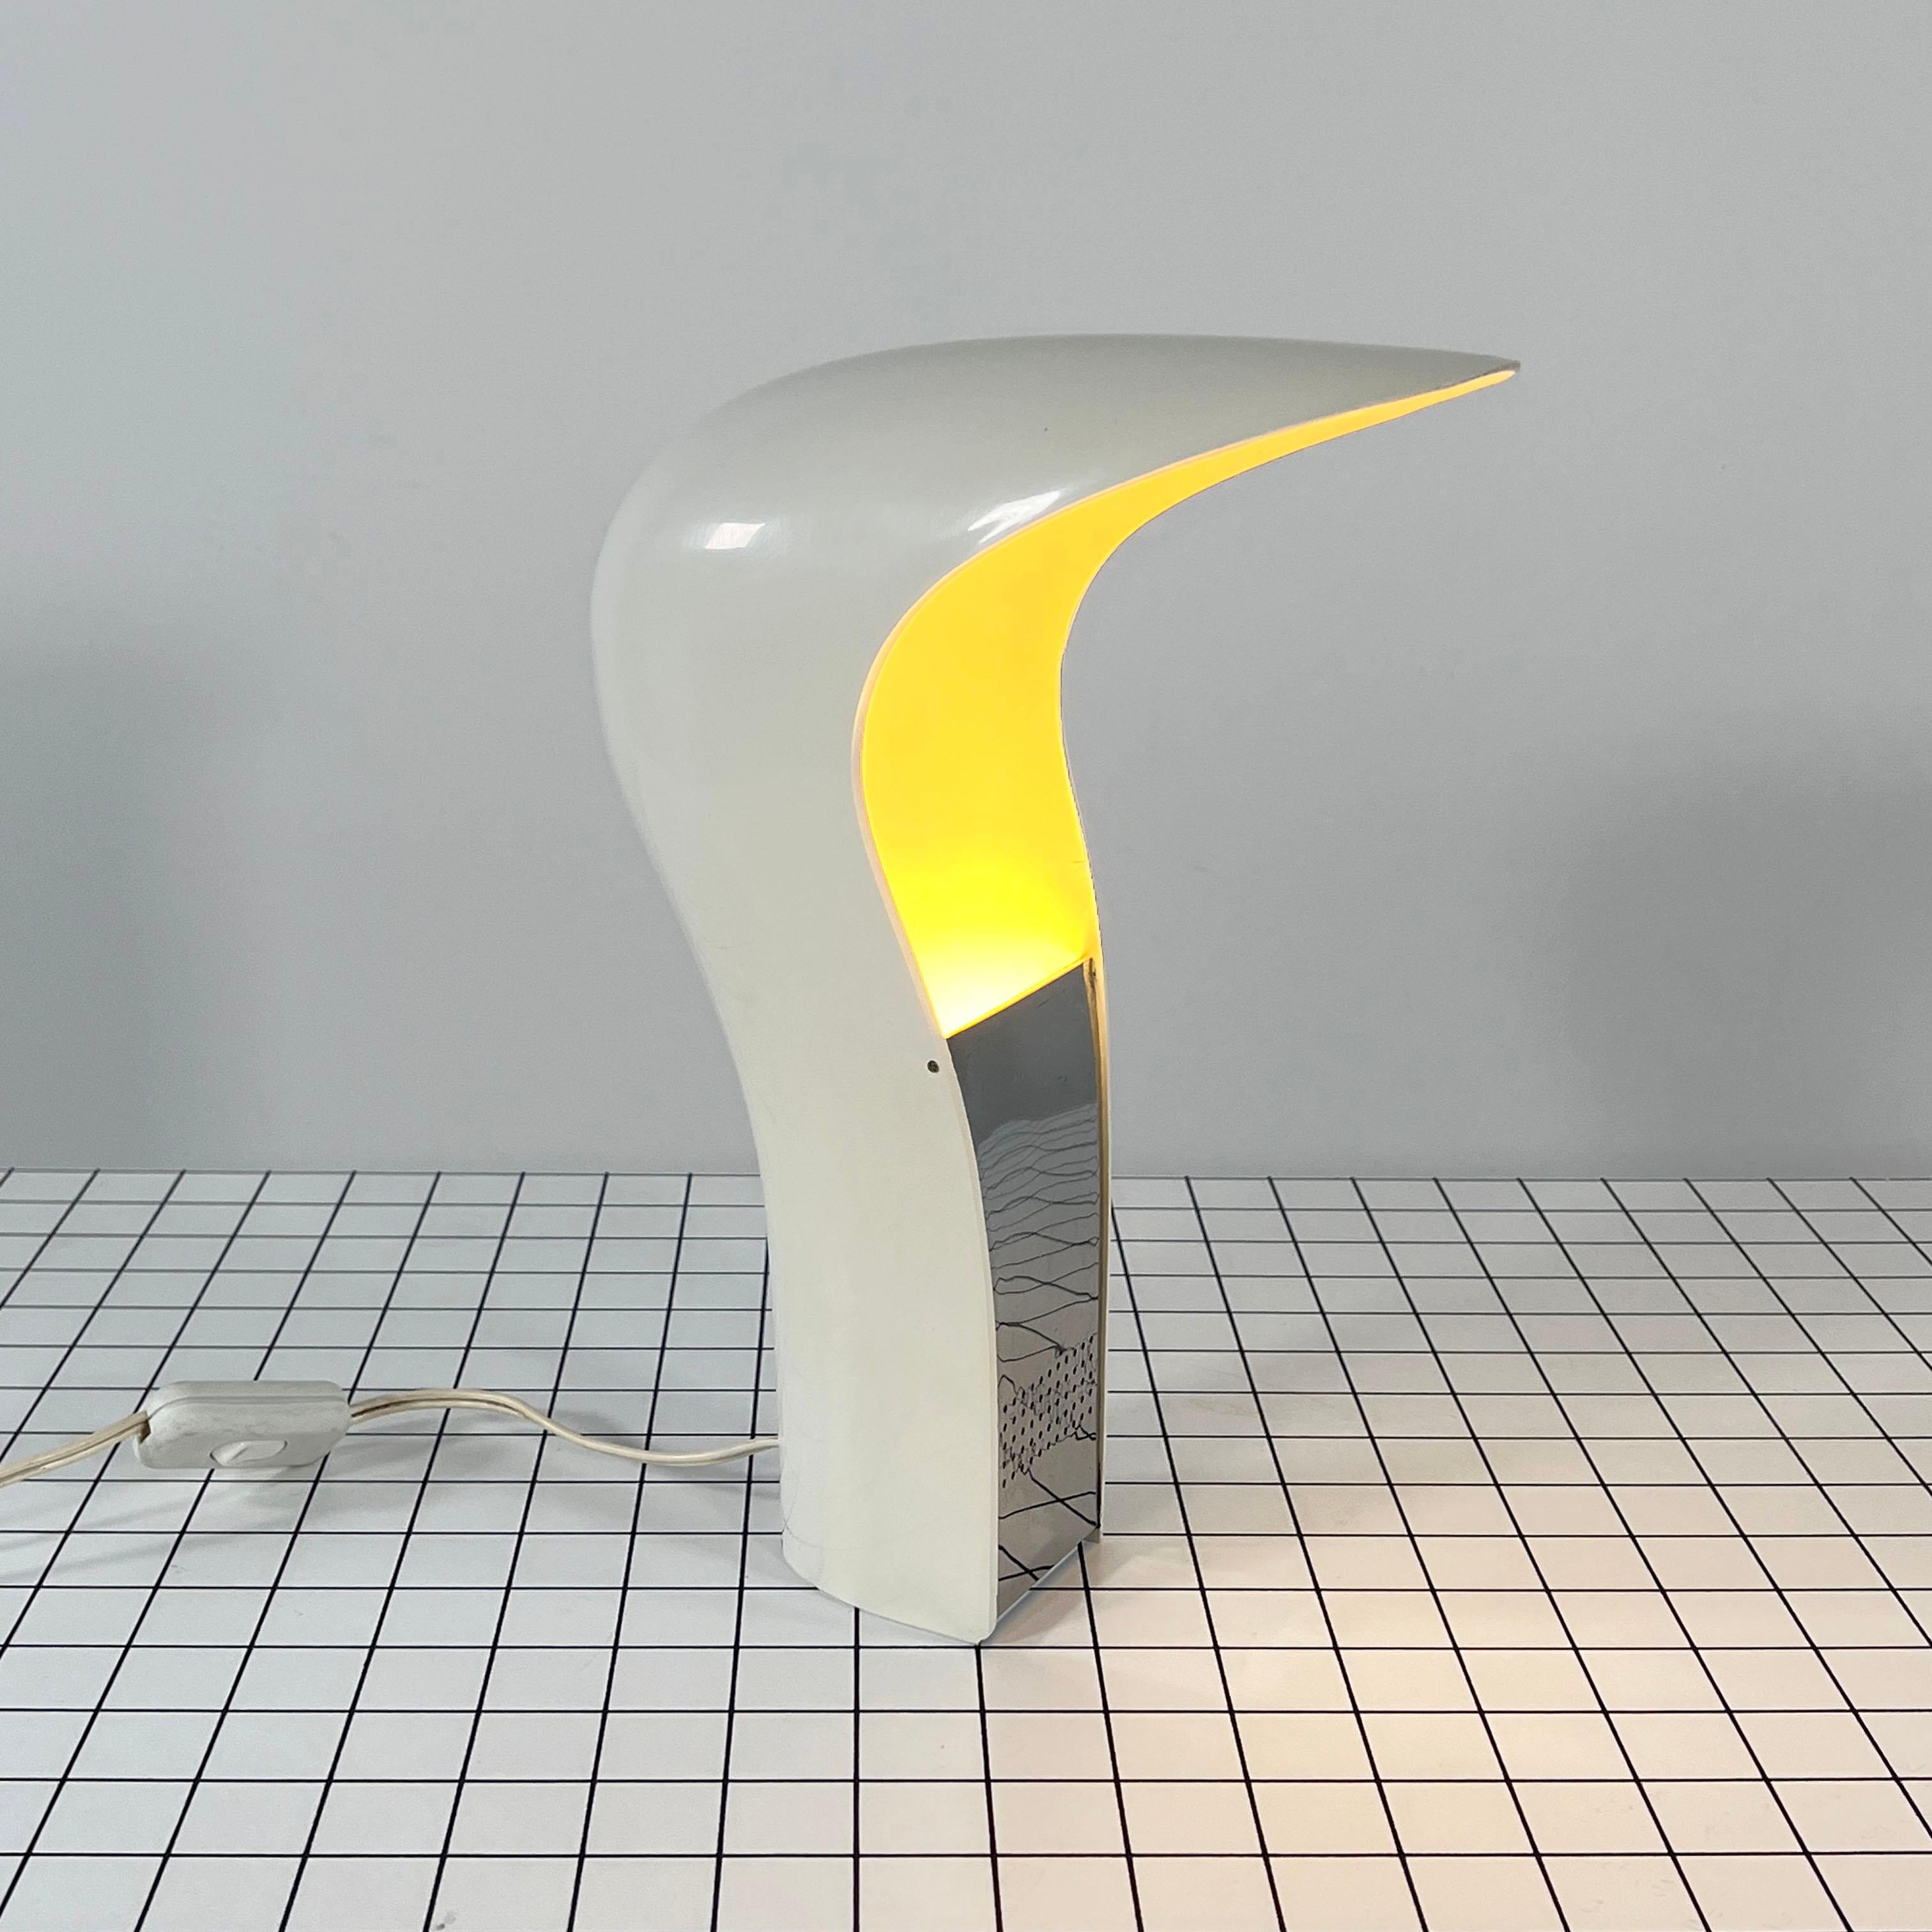 Designer - Cesare Casati & C. Emanuele Ponzio (Studio D.A.) 
Producer - Lamperti
Model - Pelota desk lamp 
Design Period - Seventies
Measurements - Width 11 cm x Depth 22 cm x Height 28 cm
Materials - Plastic, metal
Color - White, silver.
Comments -